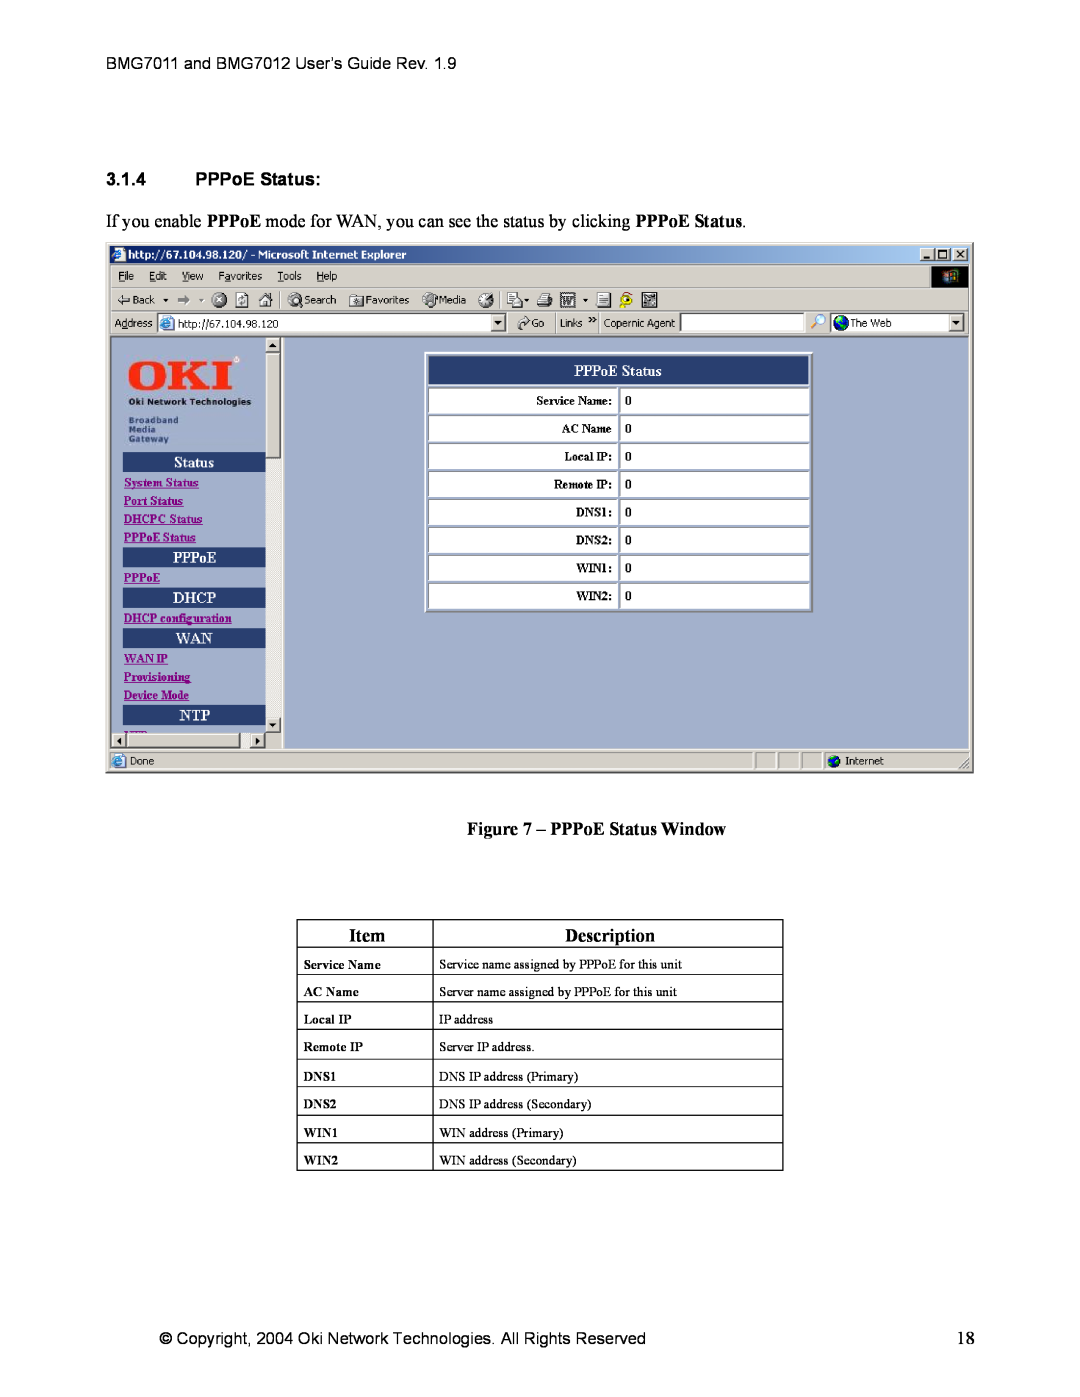 Oki BMG7012, BMG7011 manual 3.1.4PPPoE Status, PPPoE Status Window, Description 